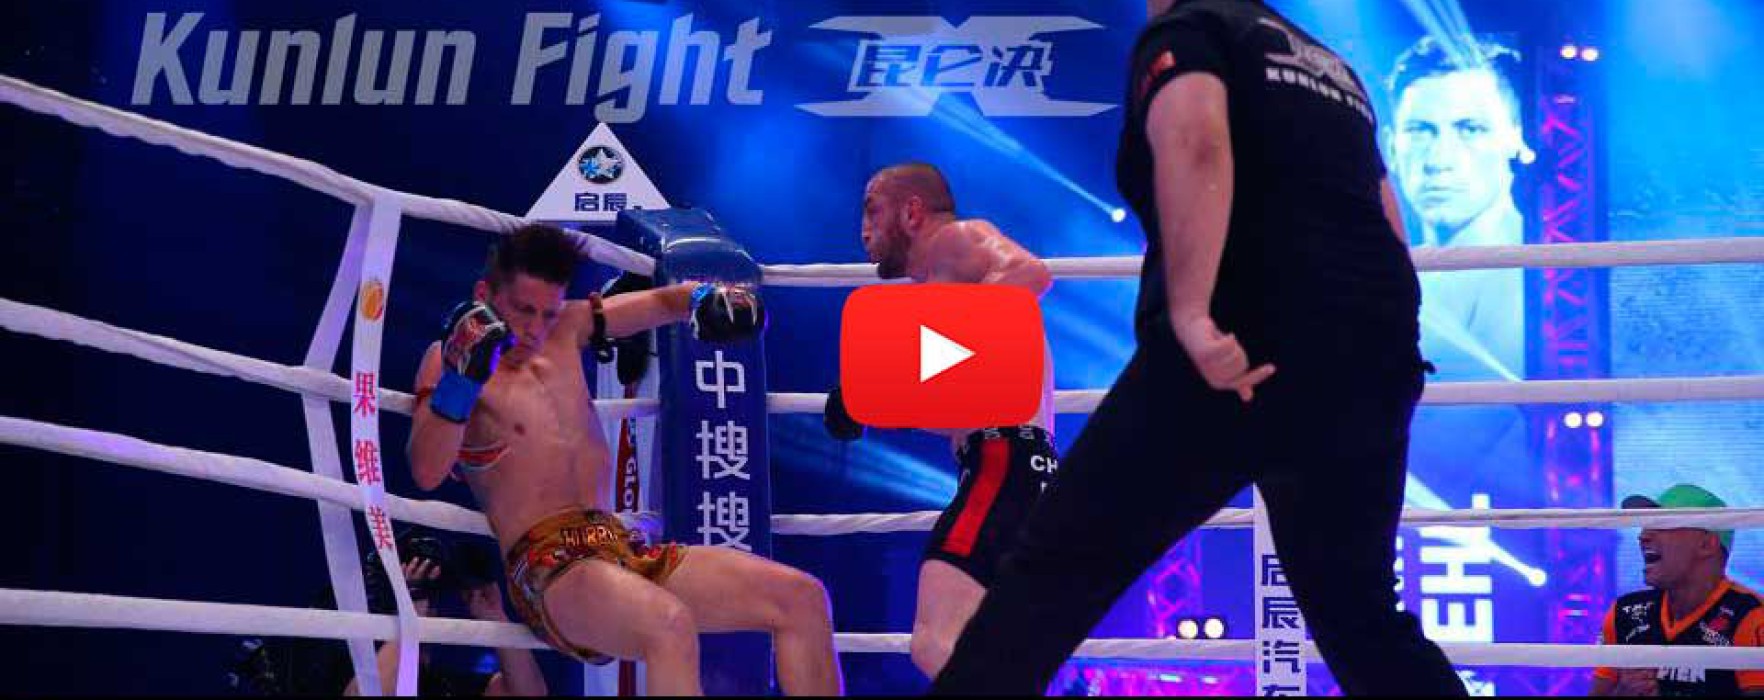 Video: Dzhabar Askerov KO’s Enriko Kehl – Kunlun Fight 29 – 15/08/2015